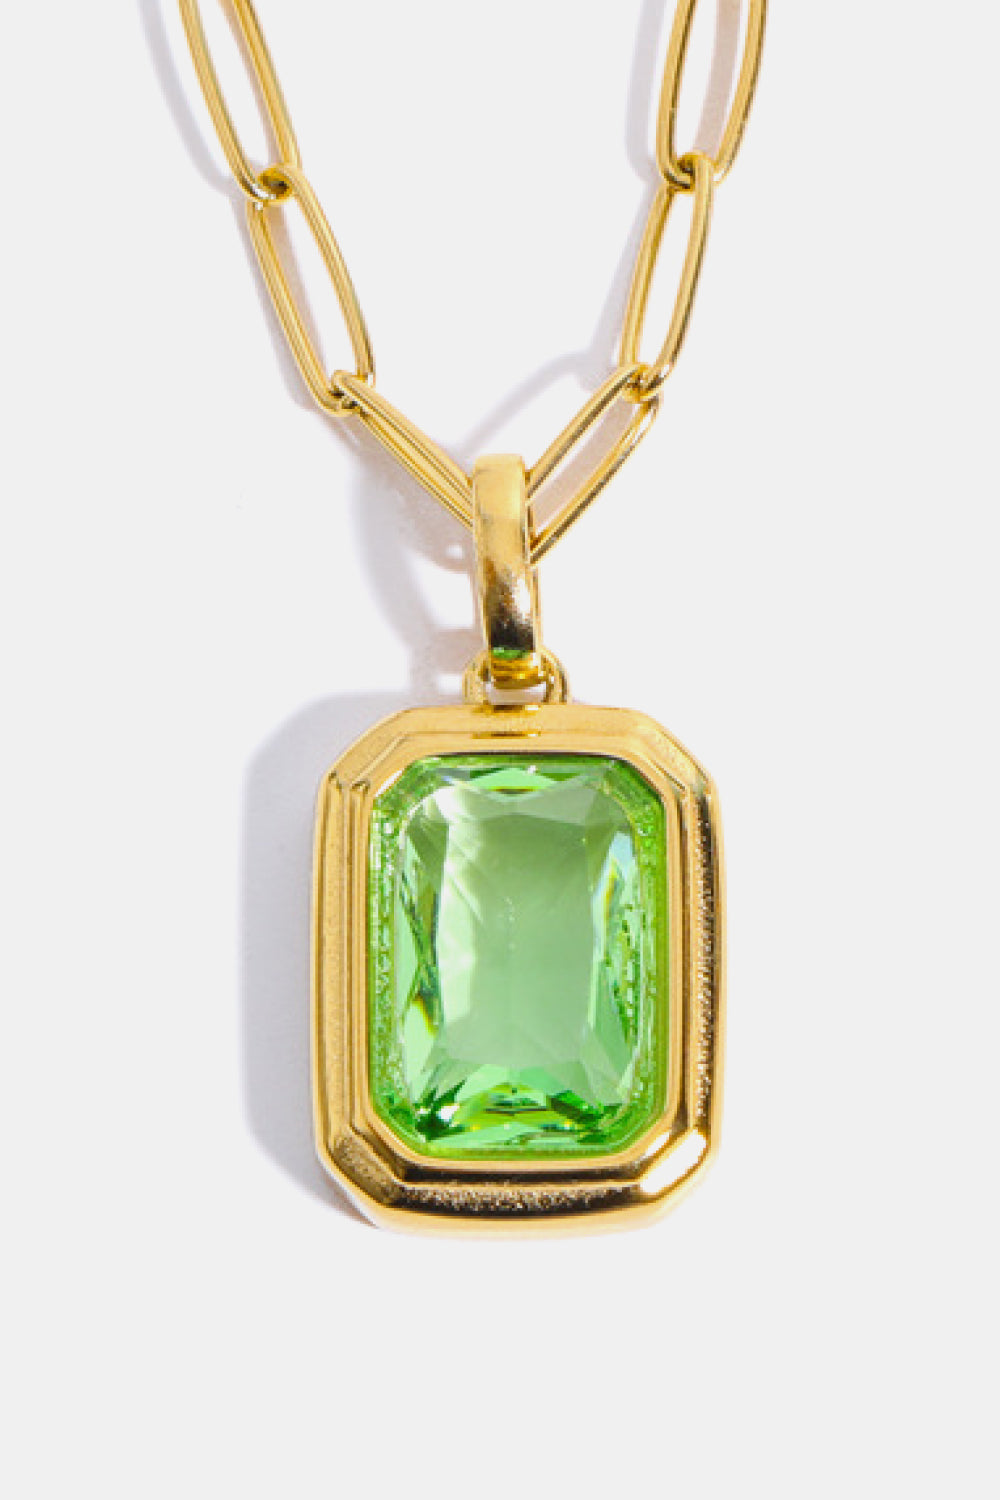 Bejeweled Pendant Necklace - ONLINE EXCLUSIVE